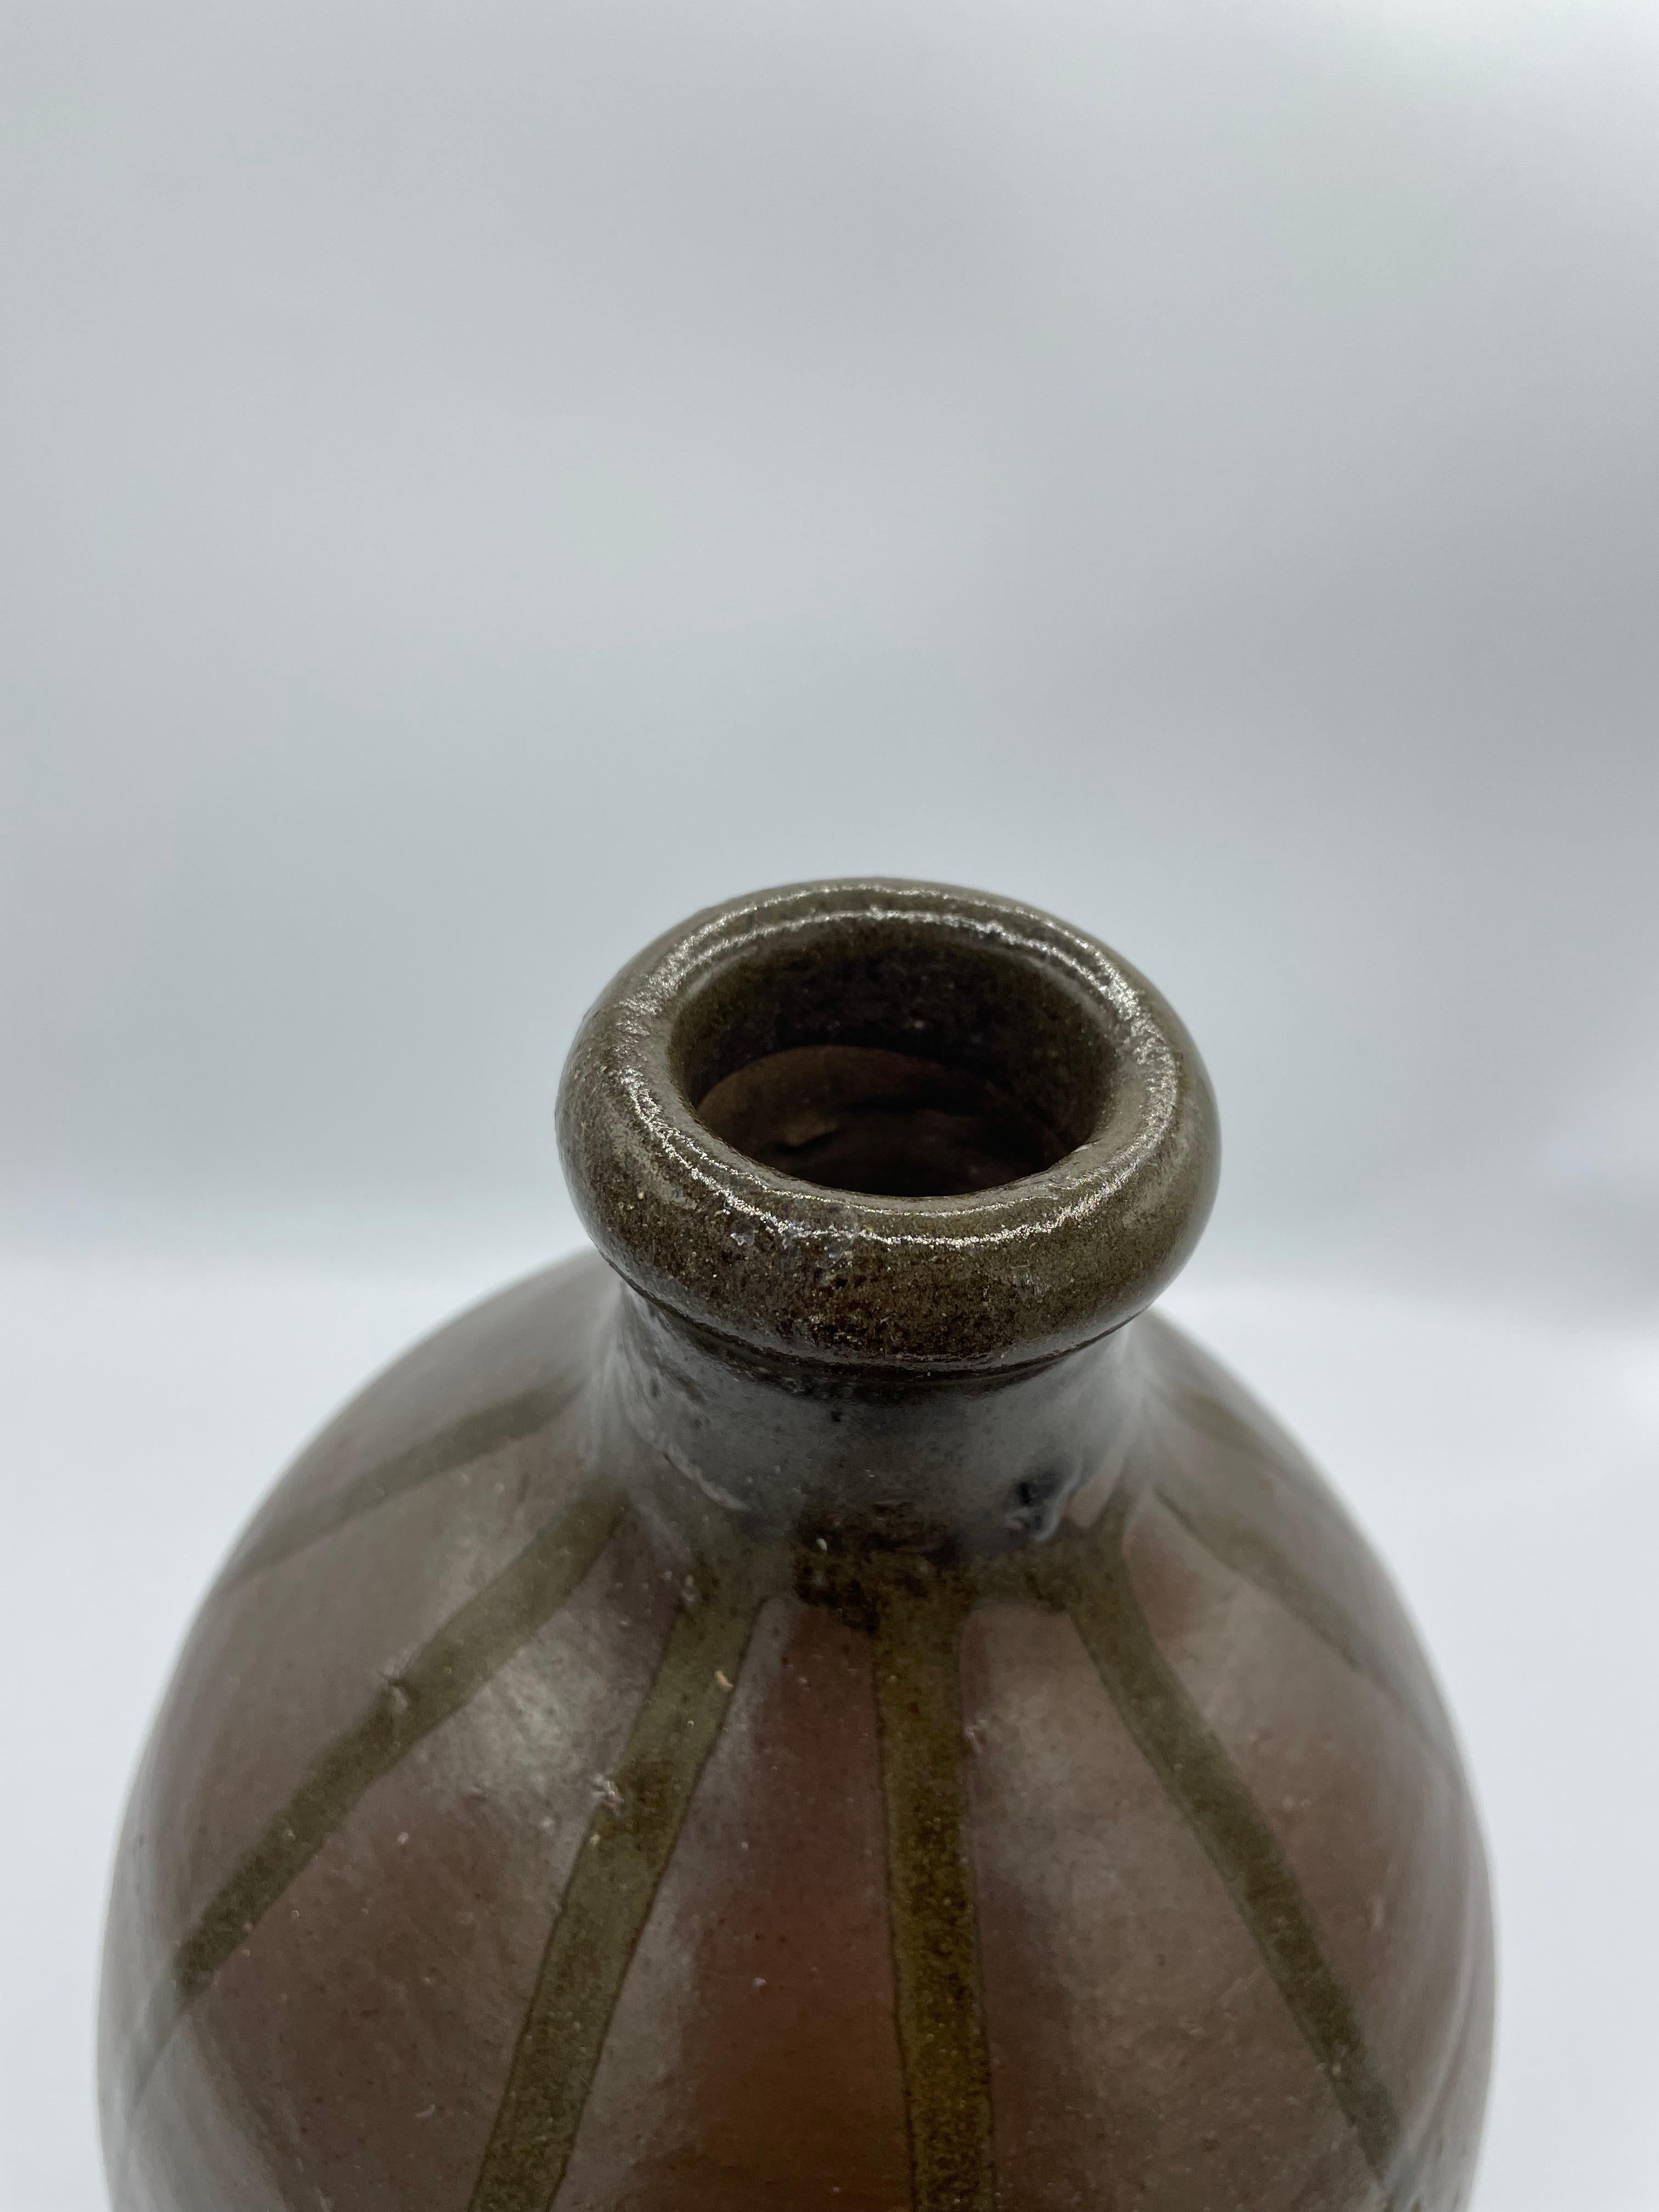 Porcelain Japanese Antique Sake Bottle 'Kayoi Tokkuri' 1900s Meiji era